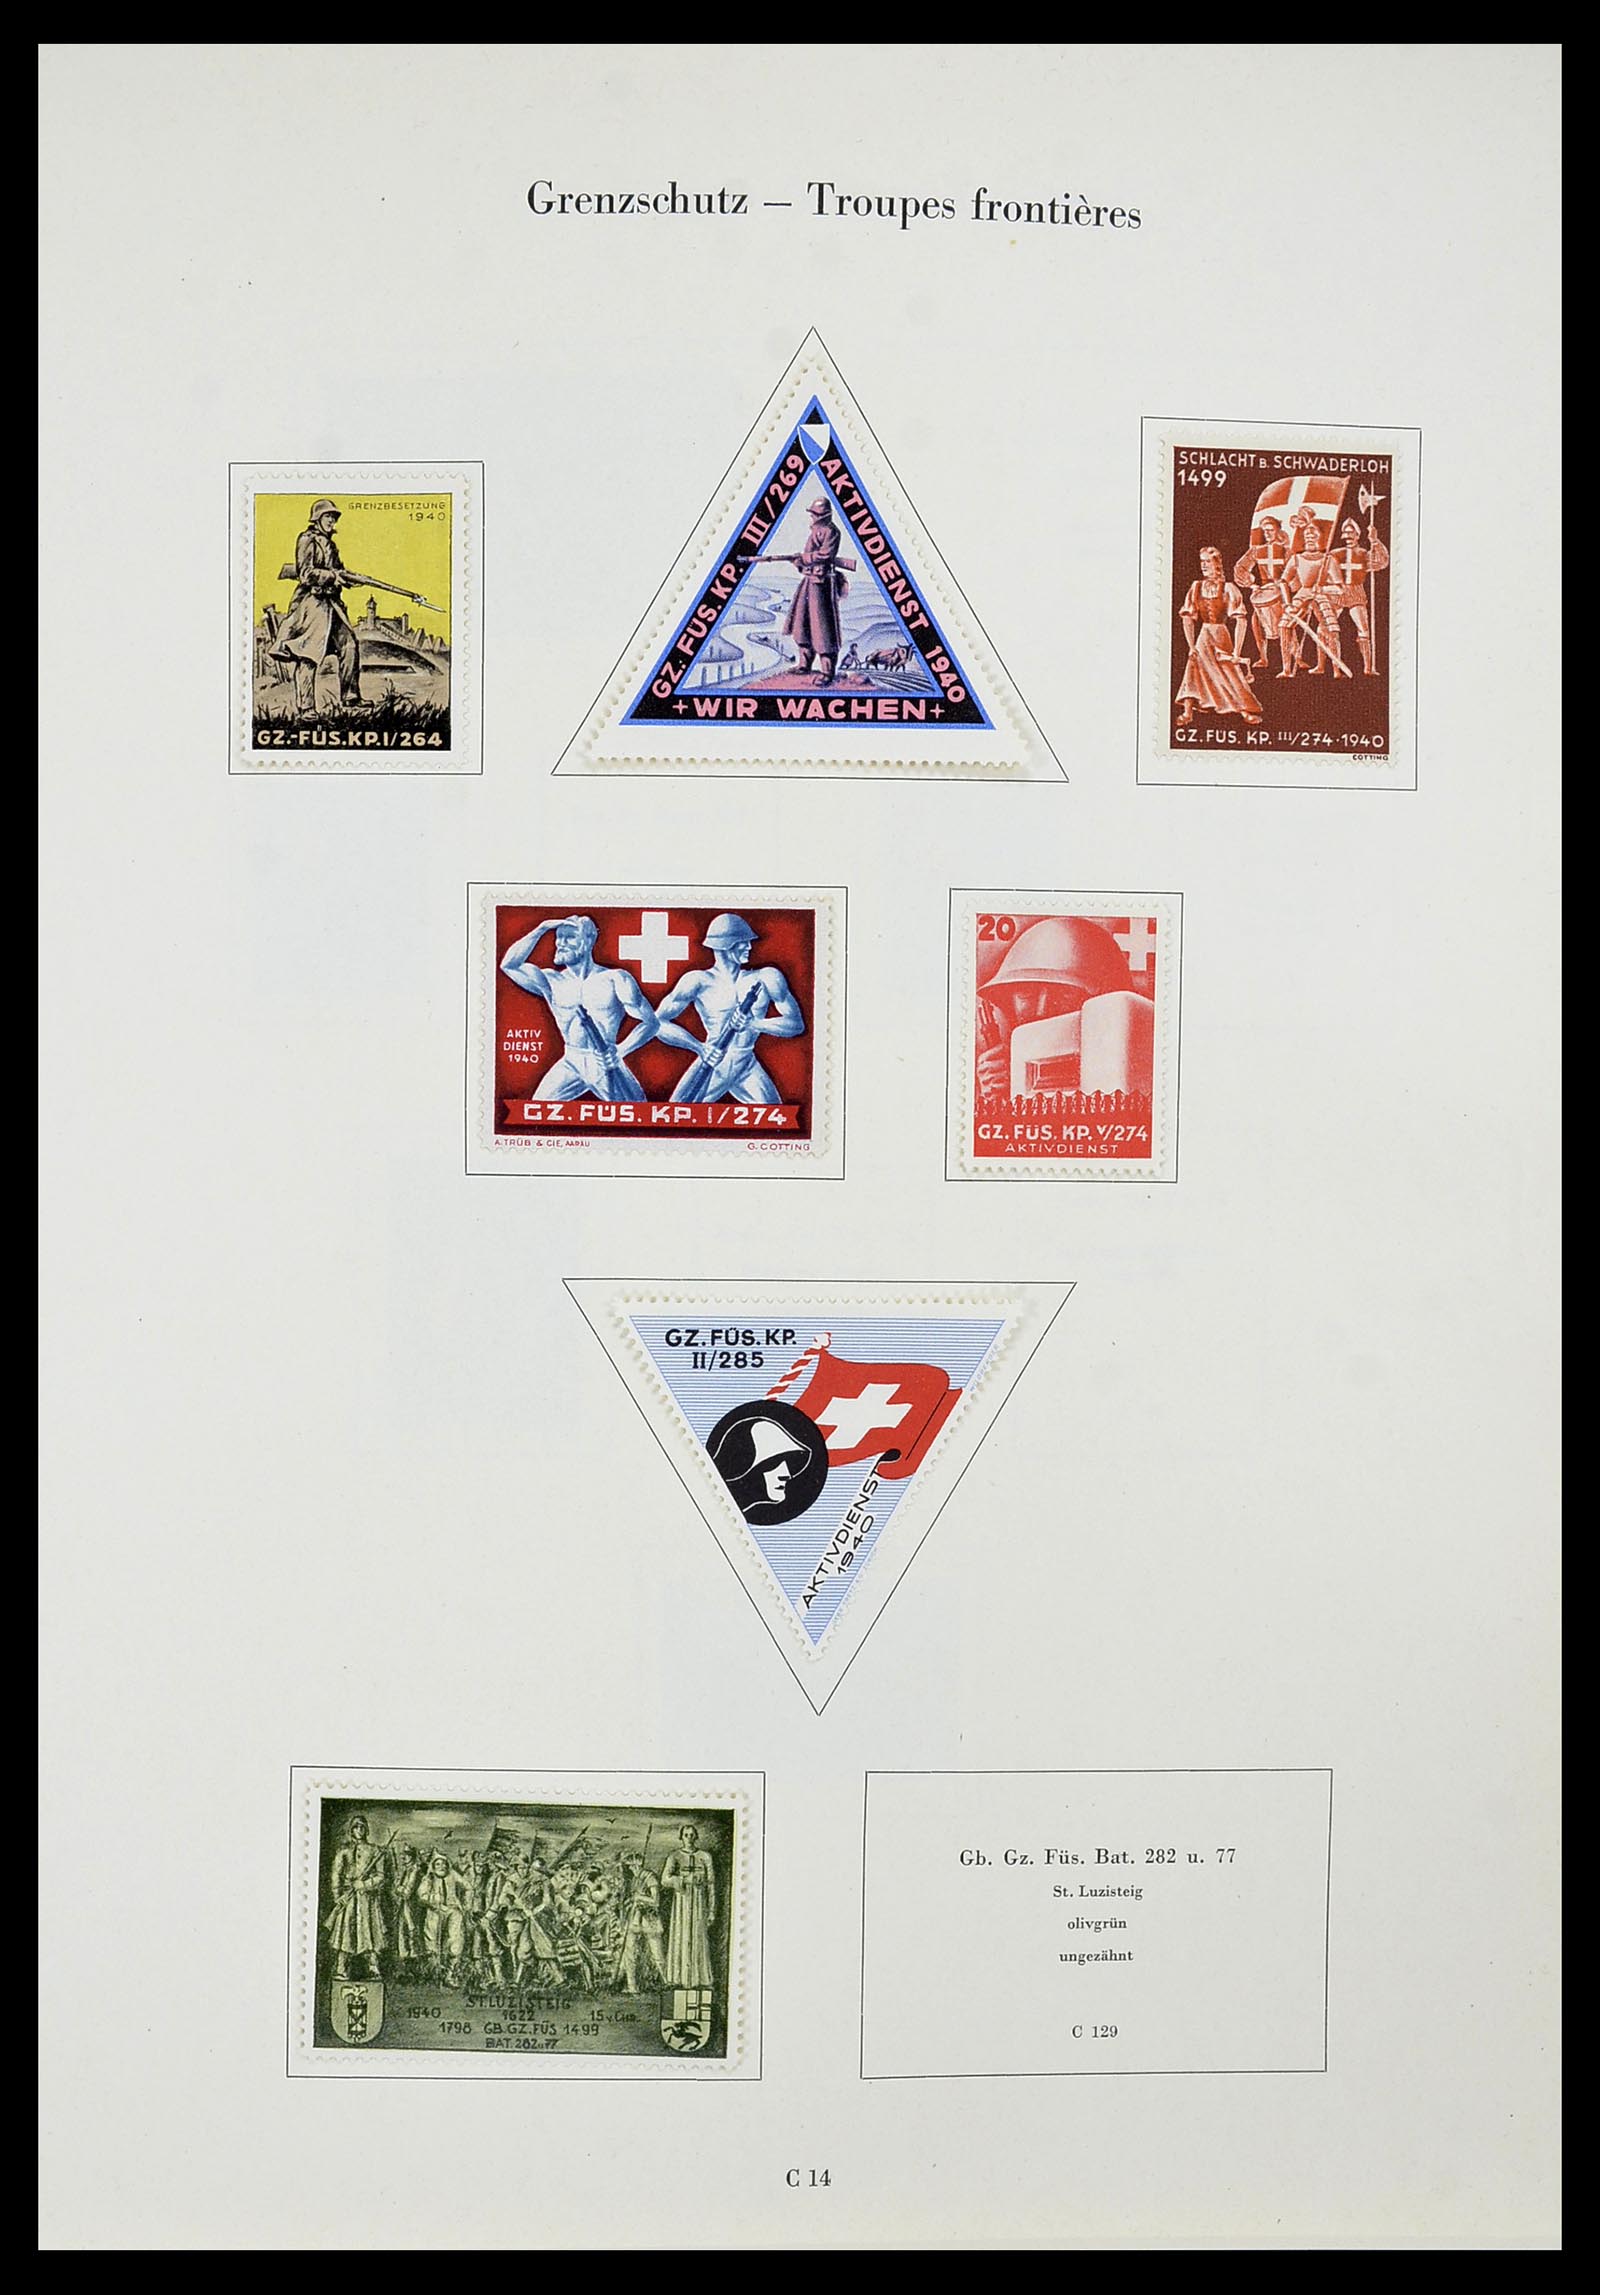 34234 099 - Stamp collection 34234 Switzerland soldier stamps 1939-1945.